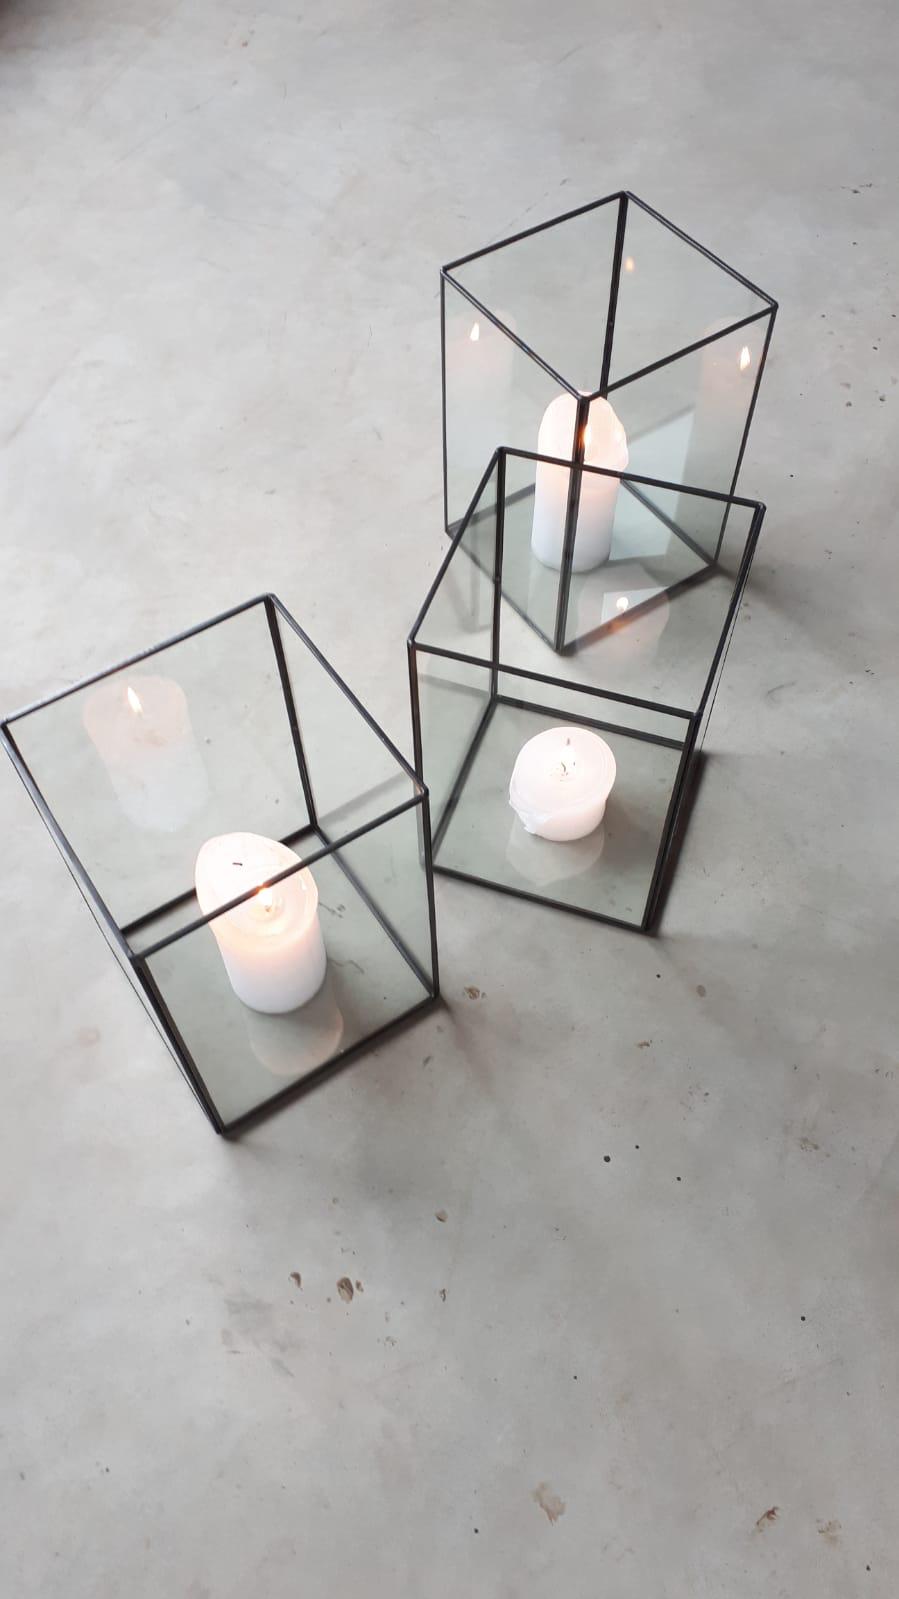 Huur │ Set van 10 kubus zwart/glas - Feline Styling